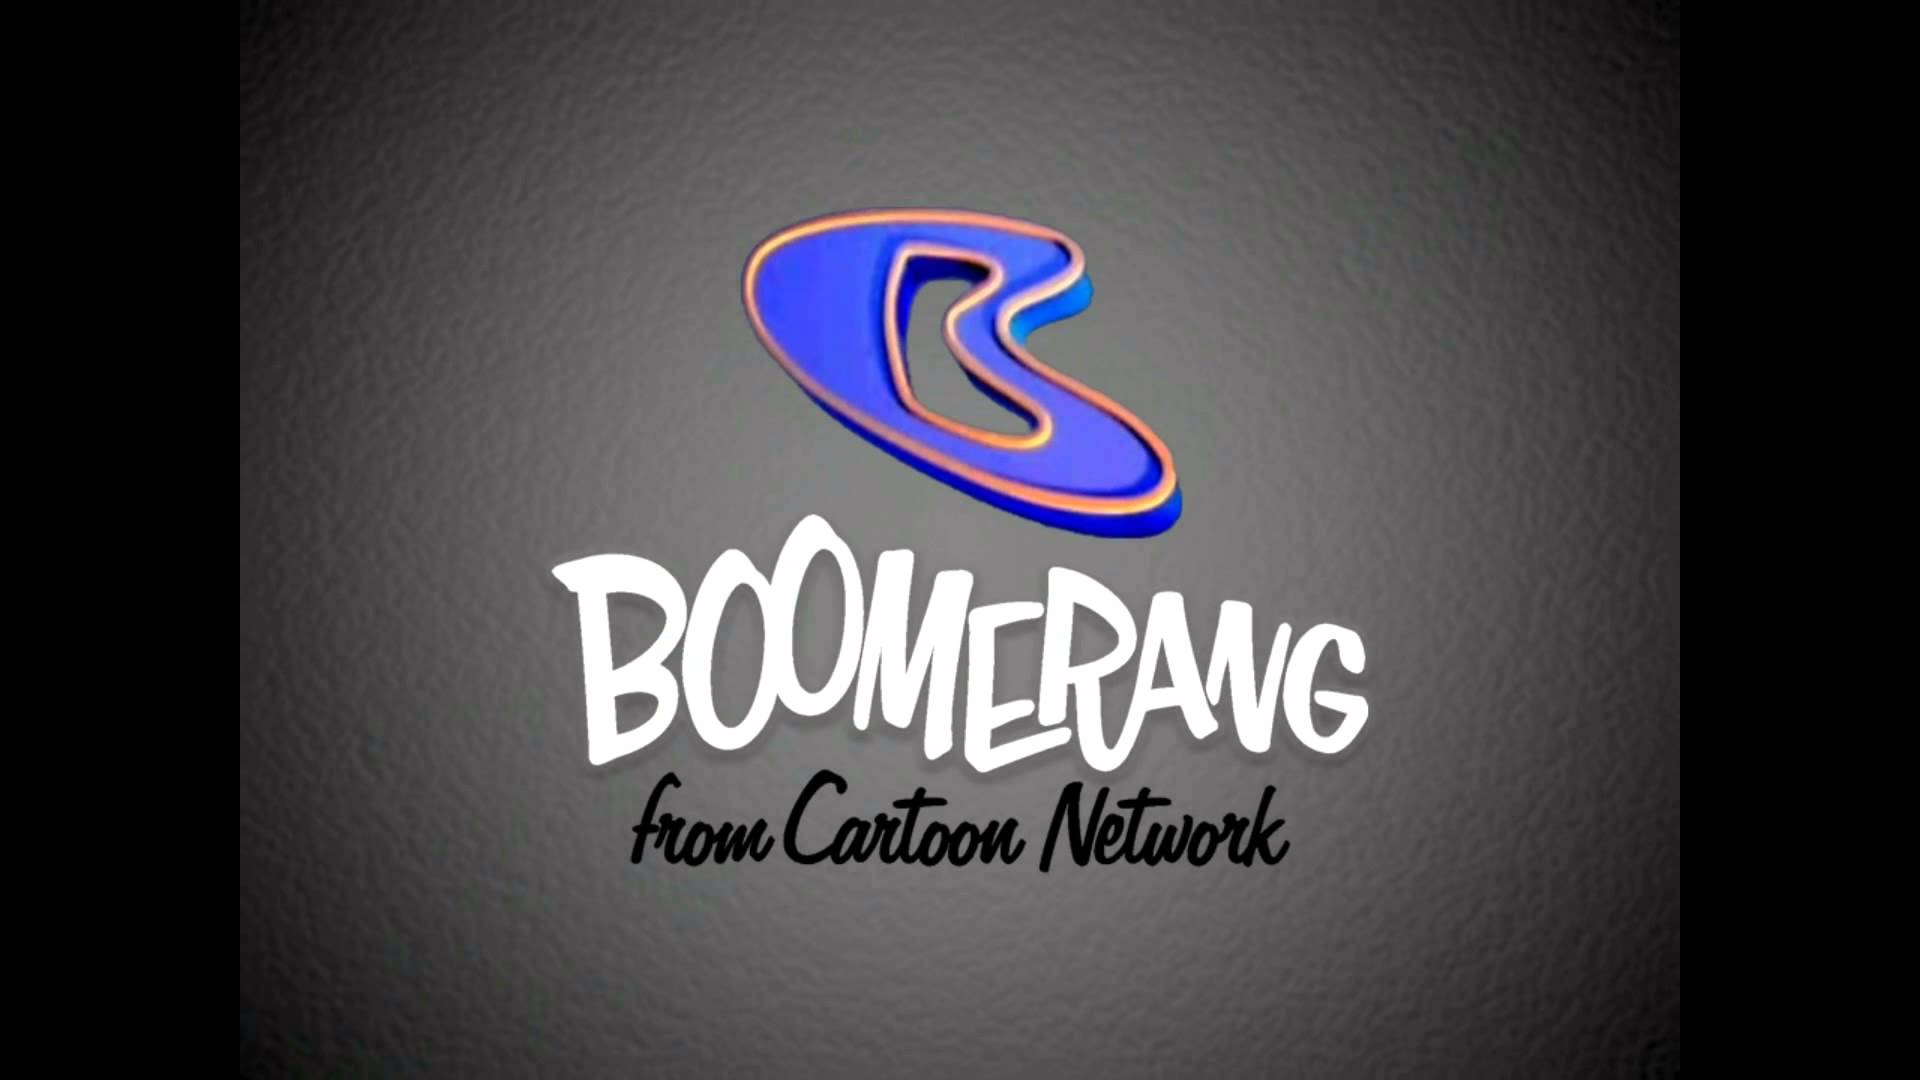 Boomerang TV Channel Logo - Boomerang from cartoon network Logos